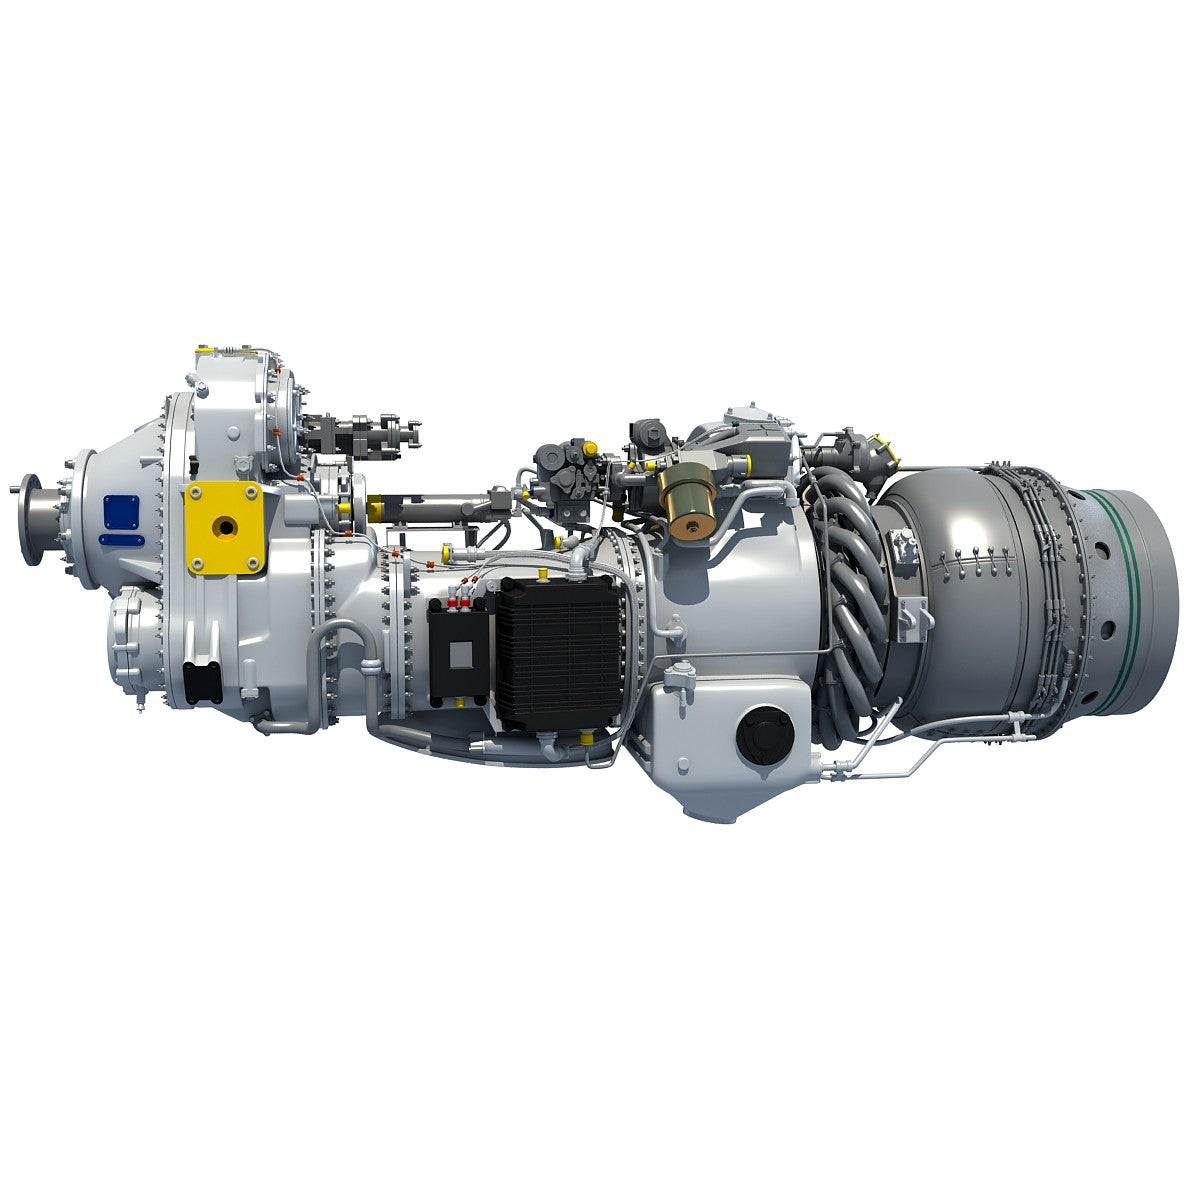 Pratt & Whitney PW100 Turboprop 3D Engine Model